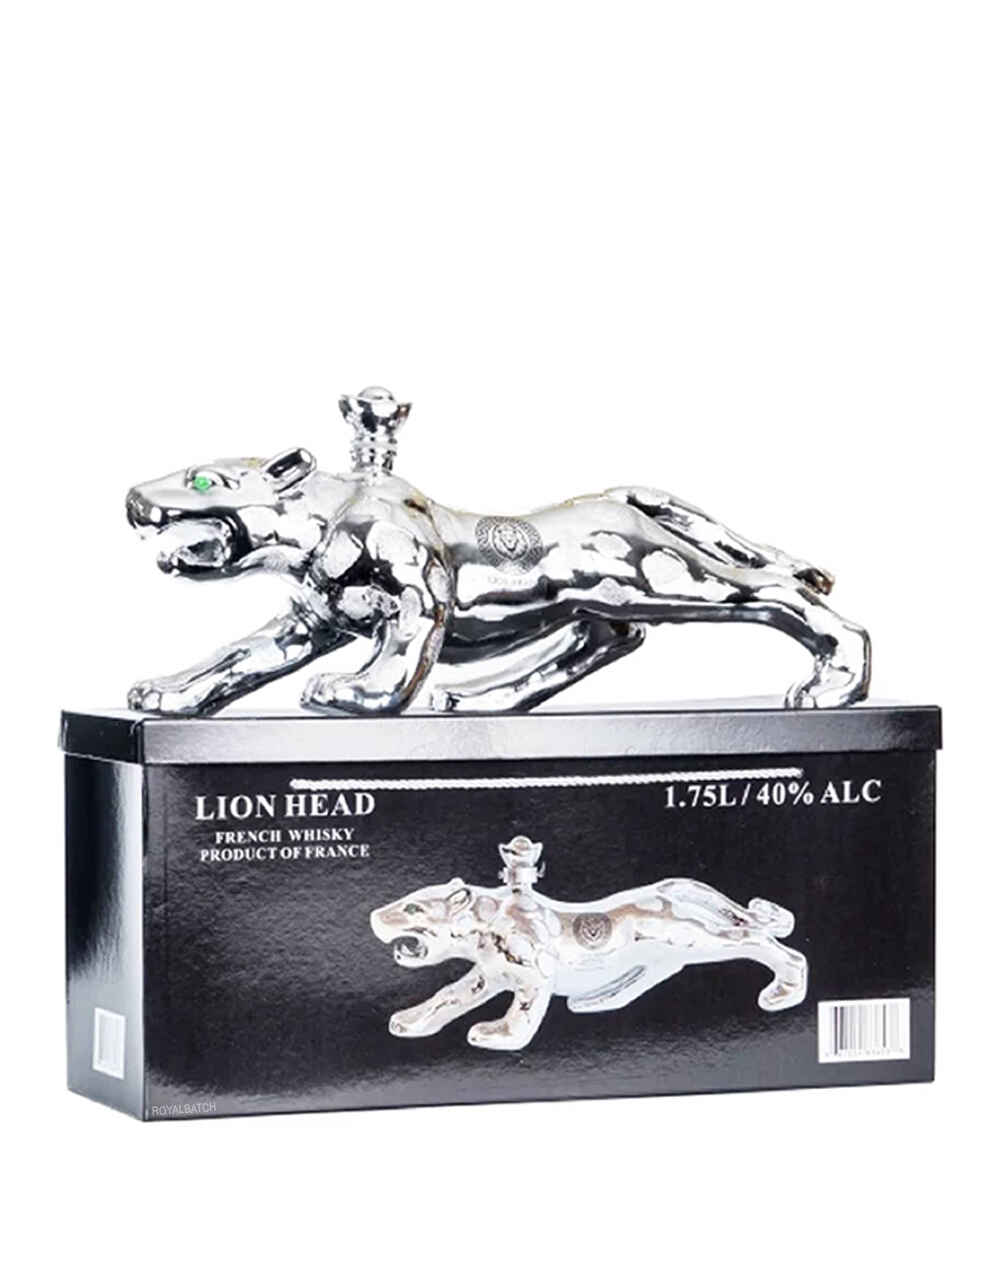 Lion Head Silver Jaguar French Whisky 1.75L